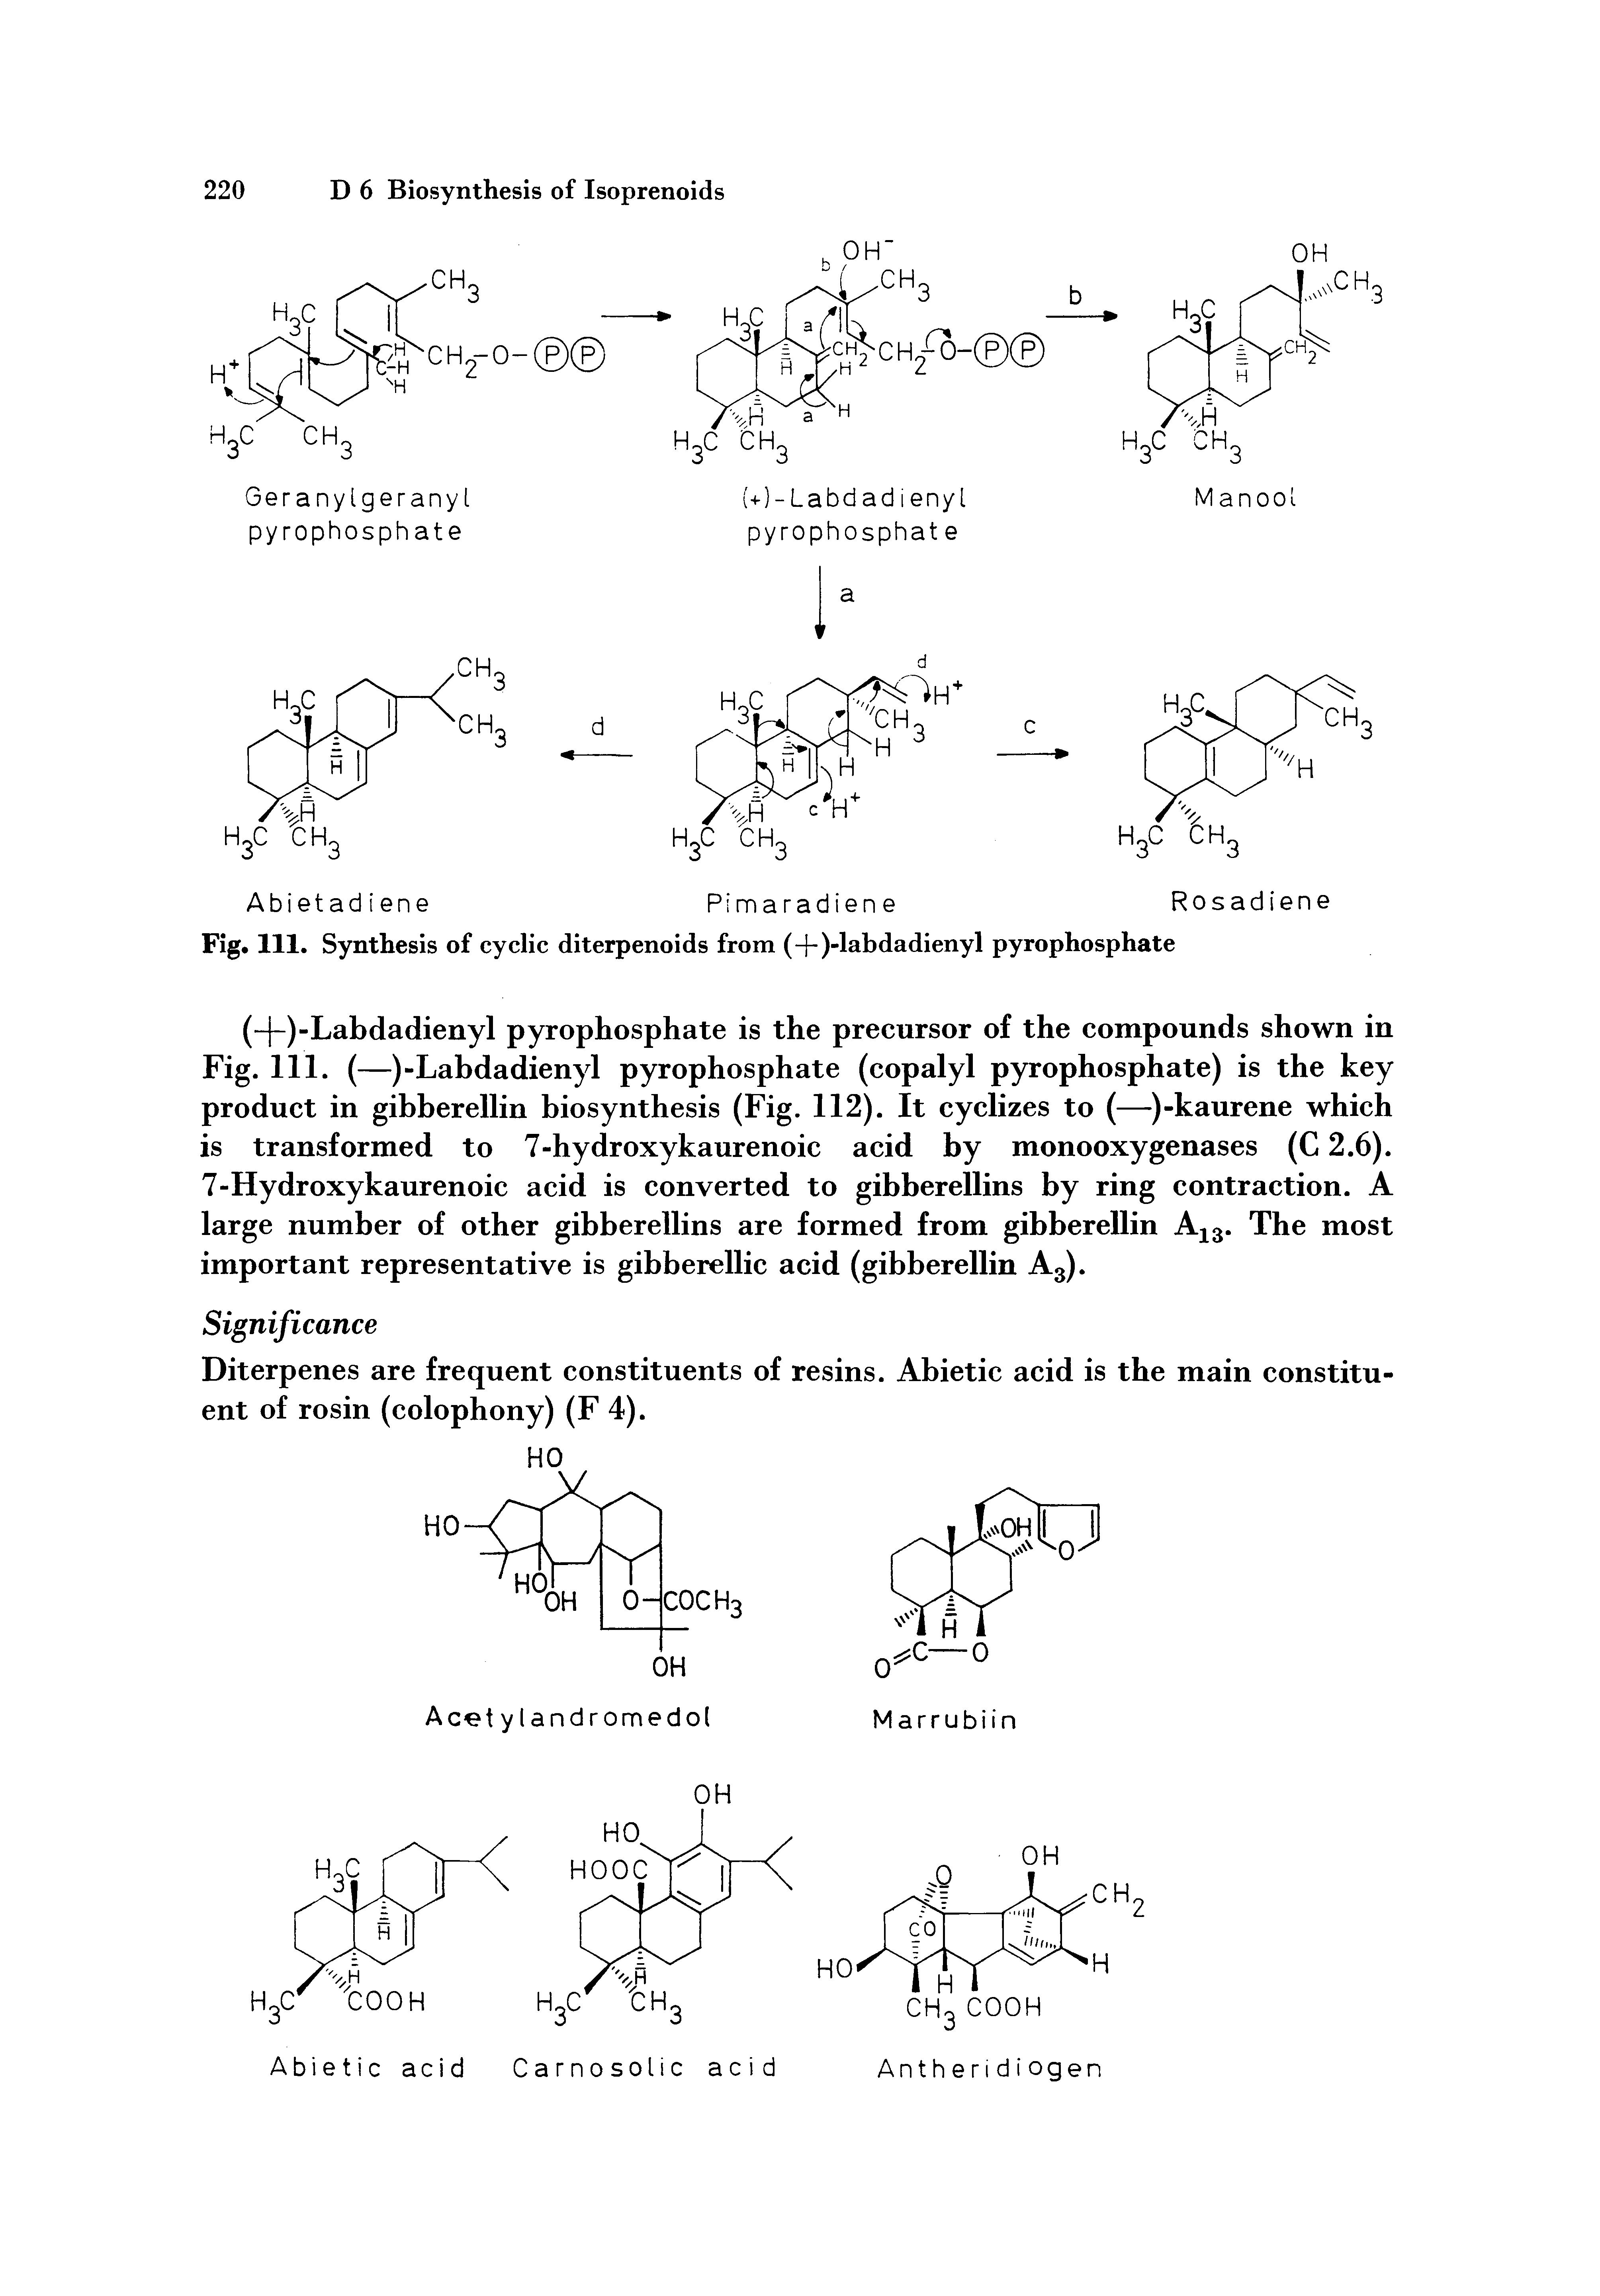 Fig. 111. Synthesis of cyclic diterpenoids from (+)-labdadienyl pyrophosphate...